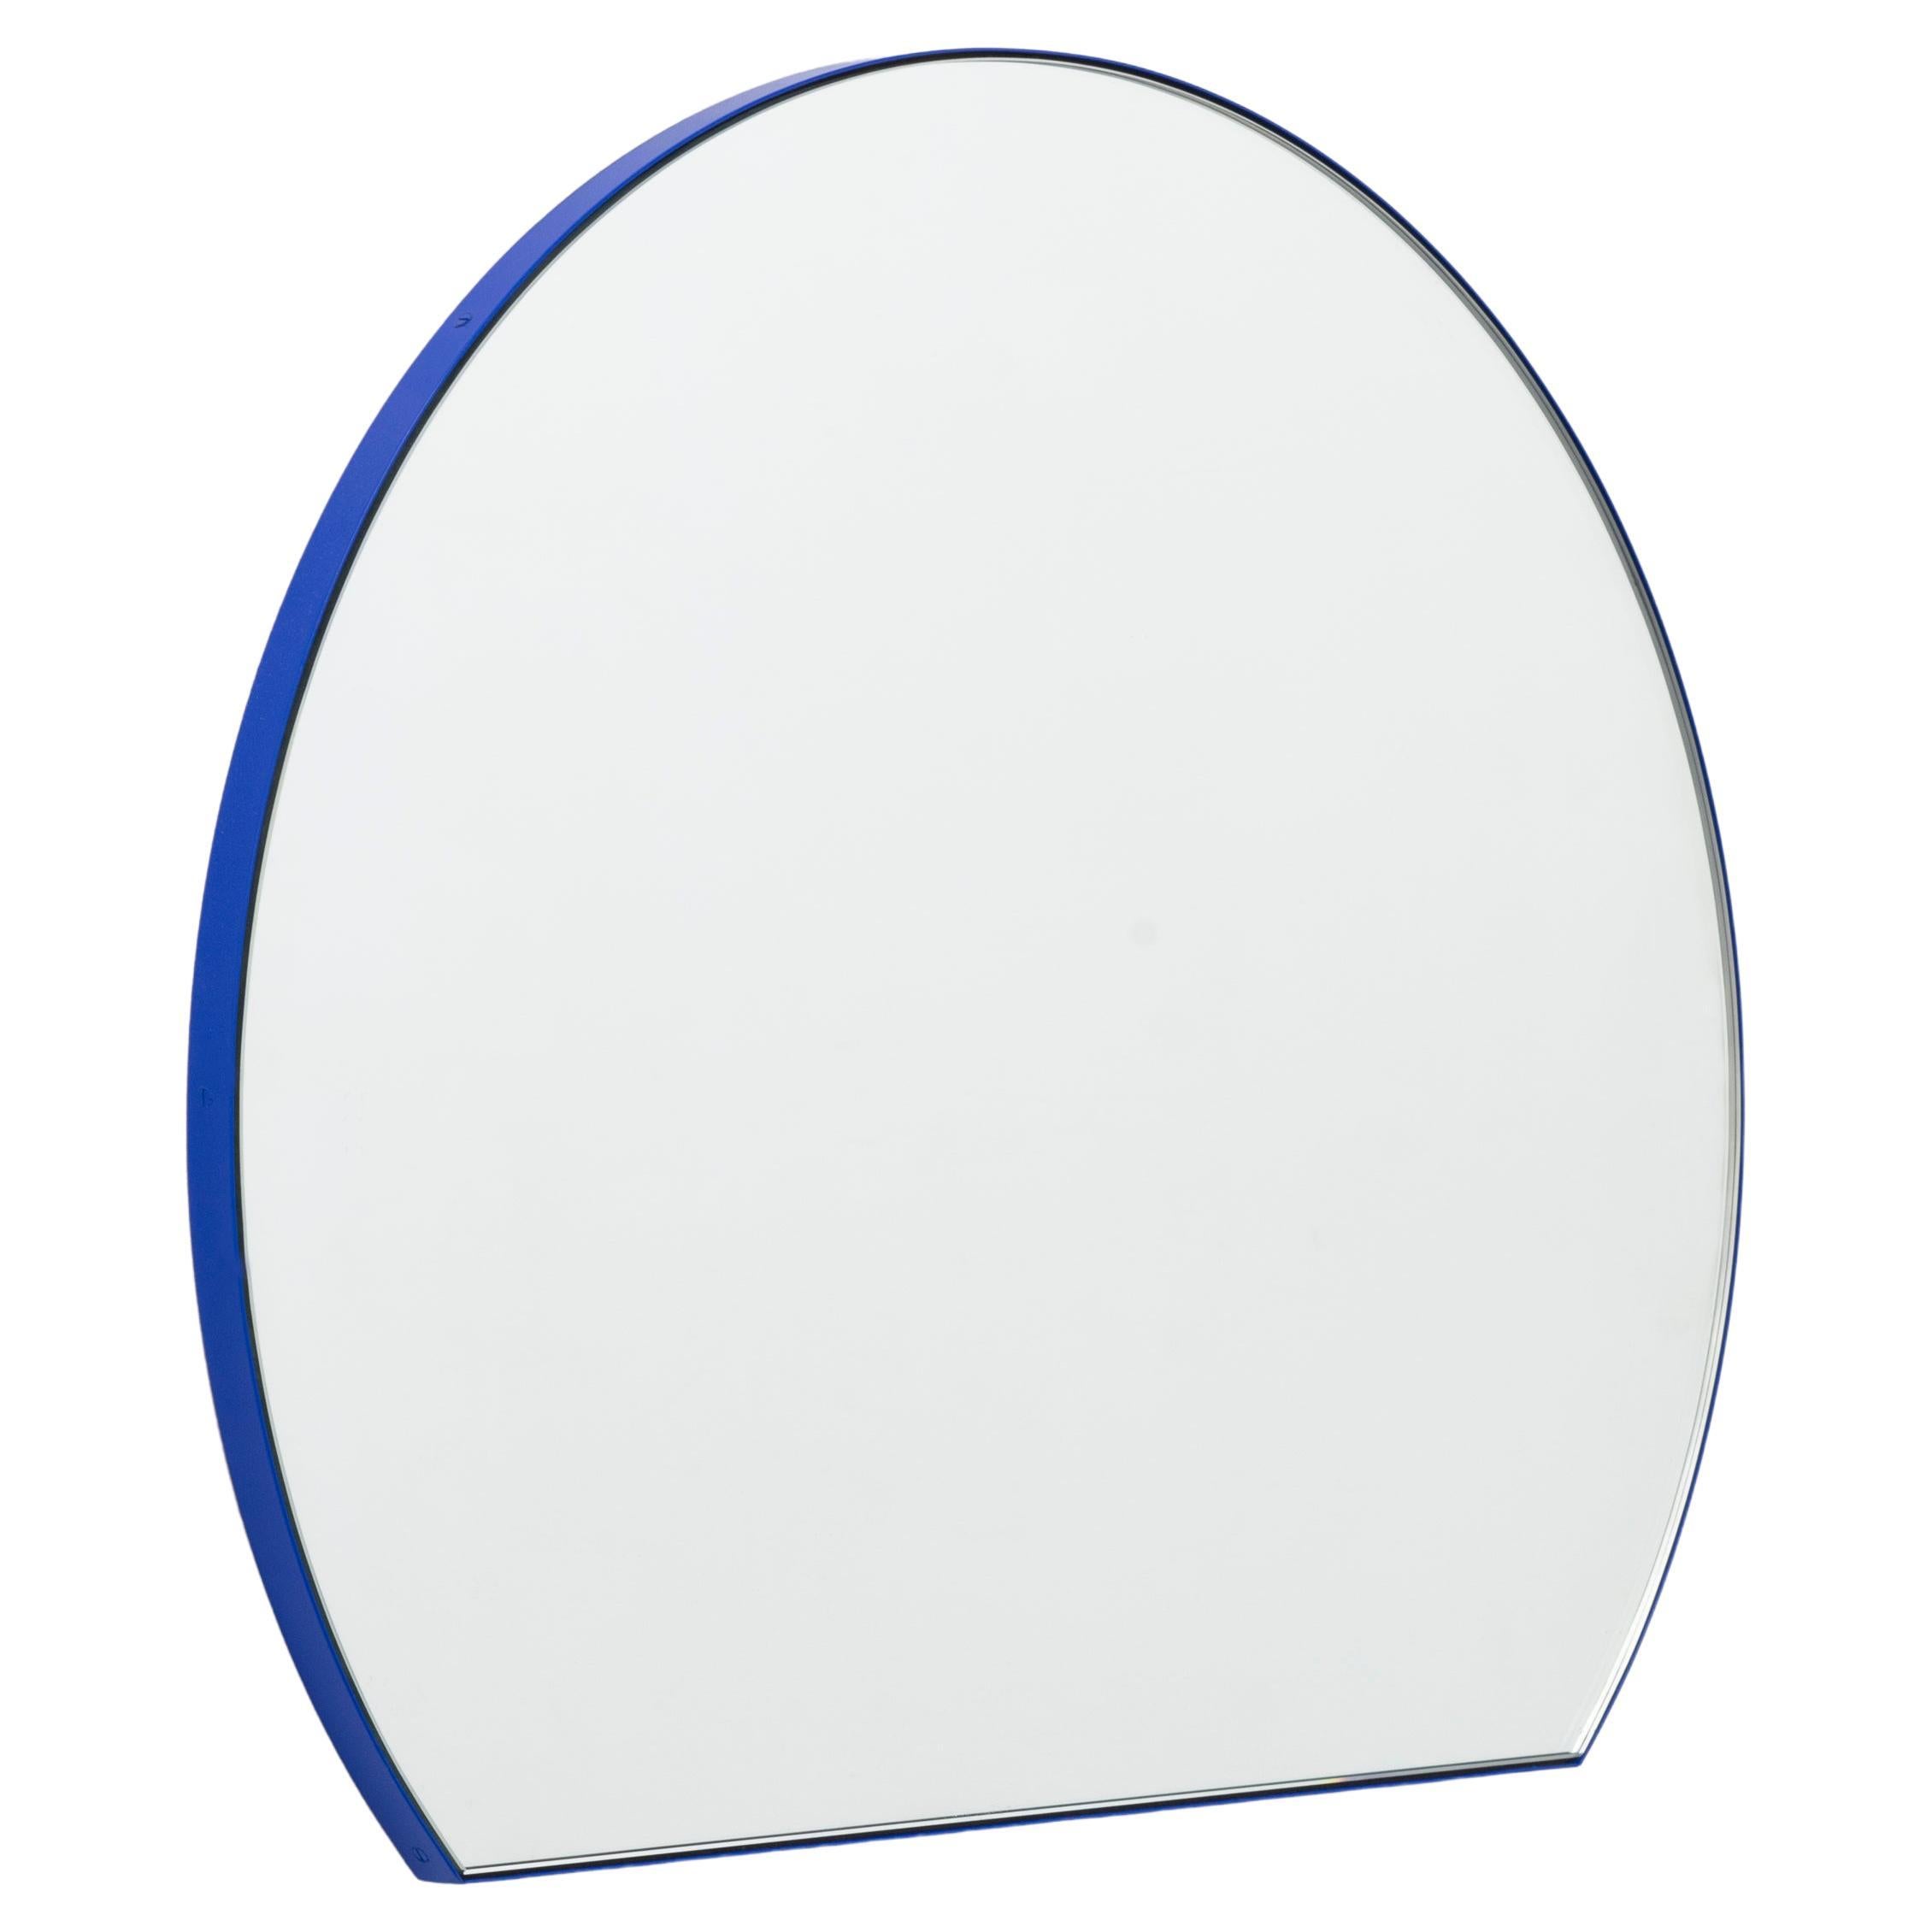 Miroir circulaire moderne court Orbis Trecus avec cadre bleu, standard en vente